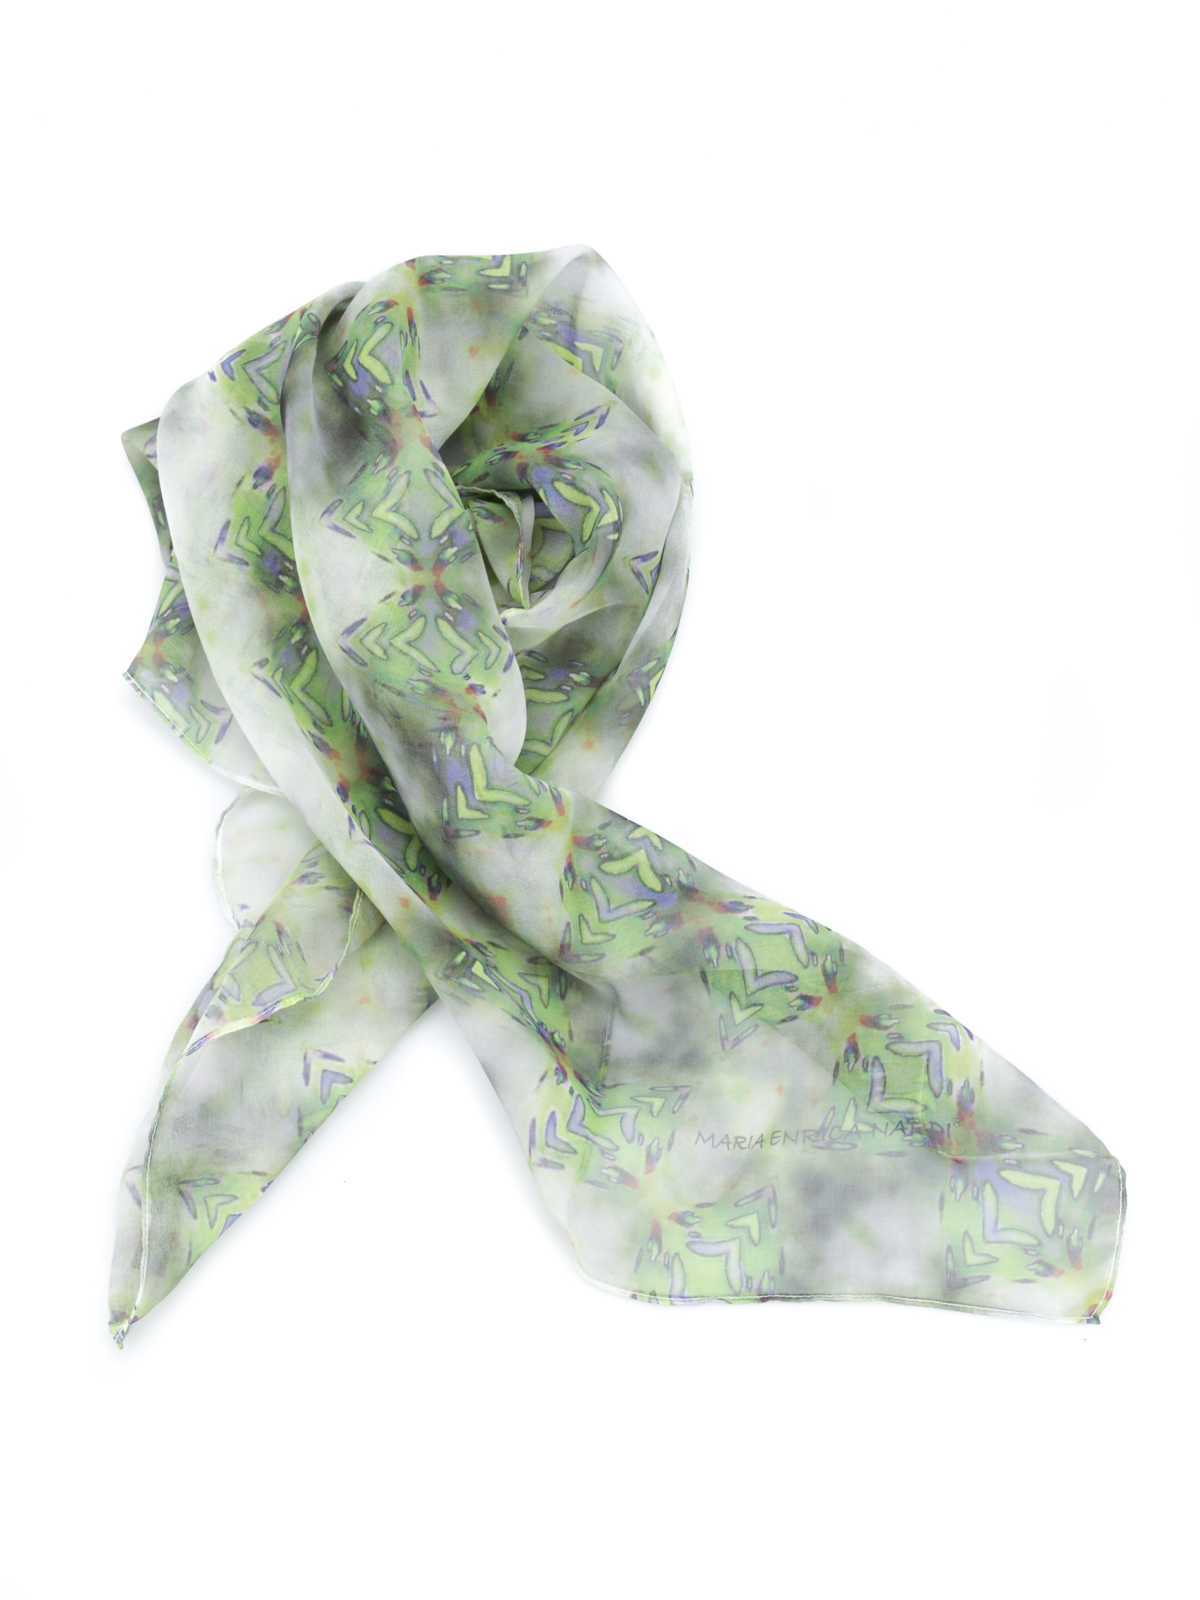 Pierre-Louis Mascia pure Silk Modal scarf wrap 100% authentic